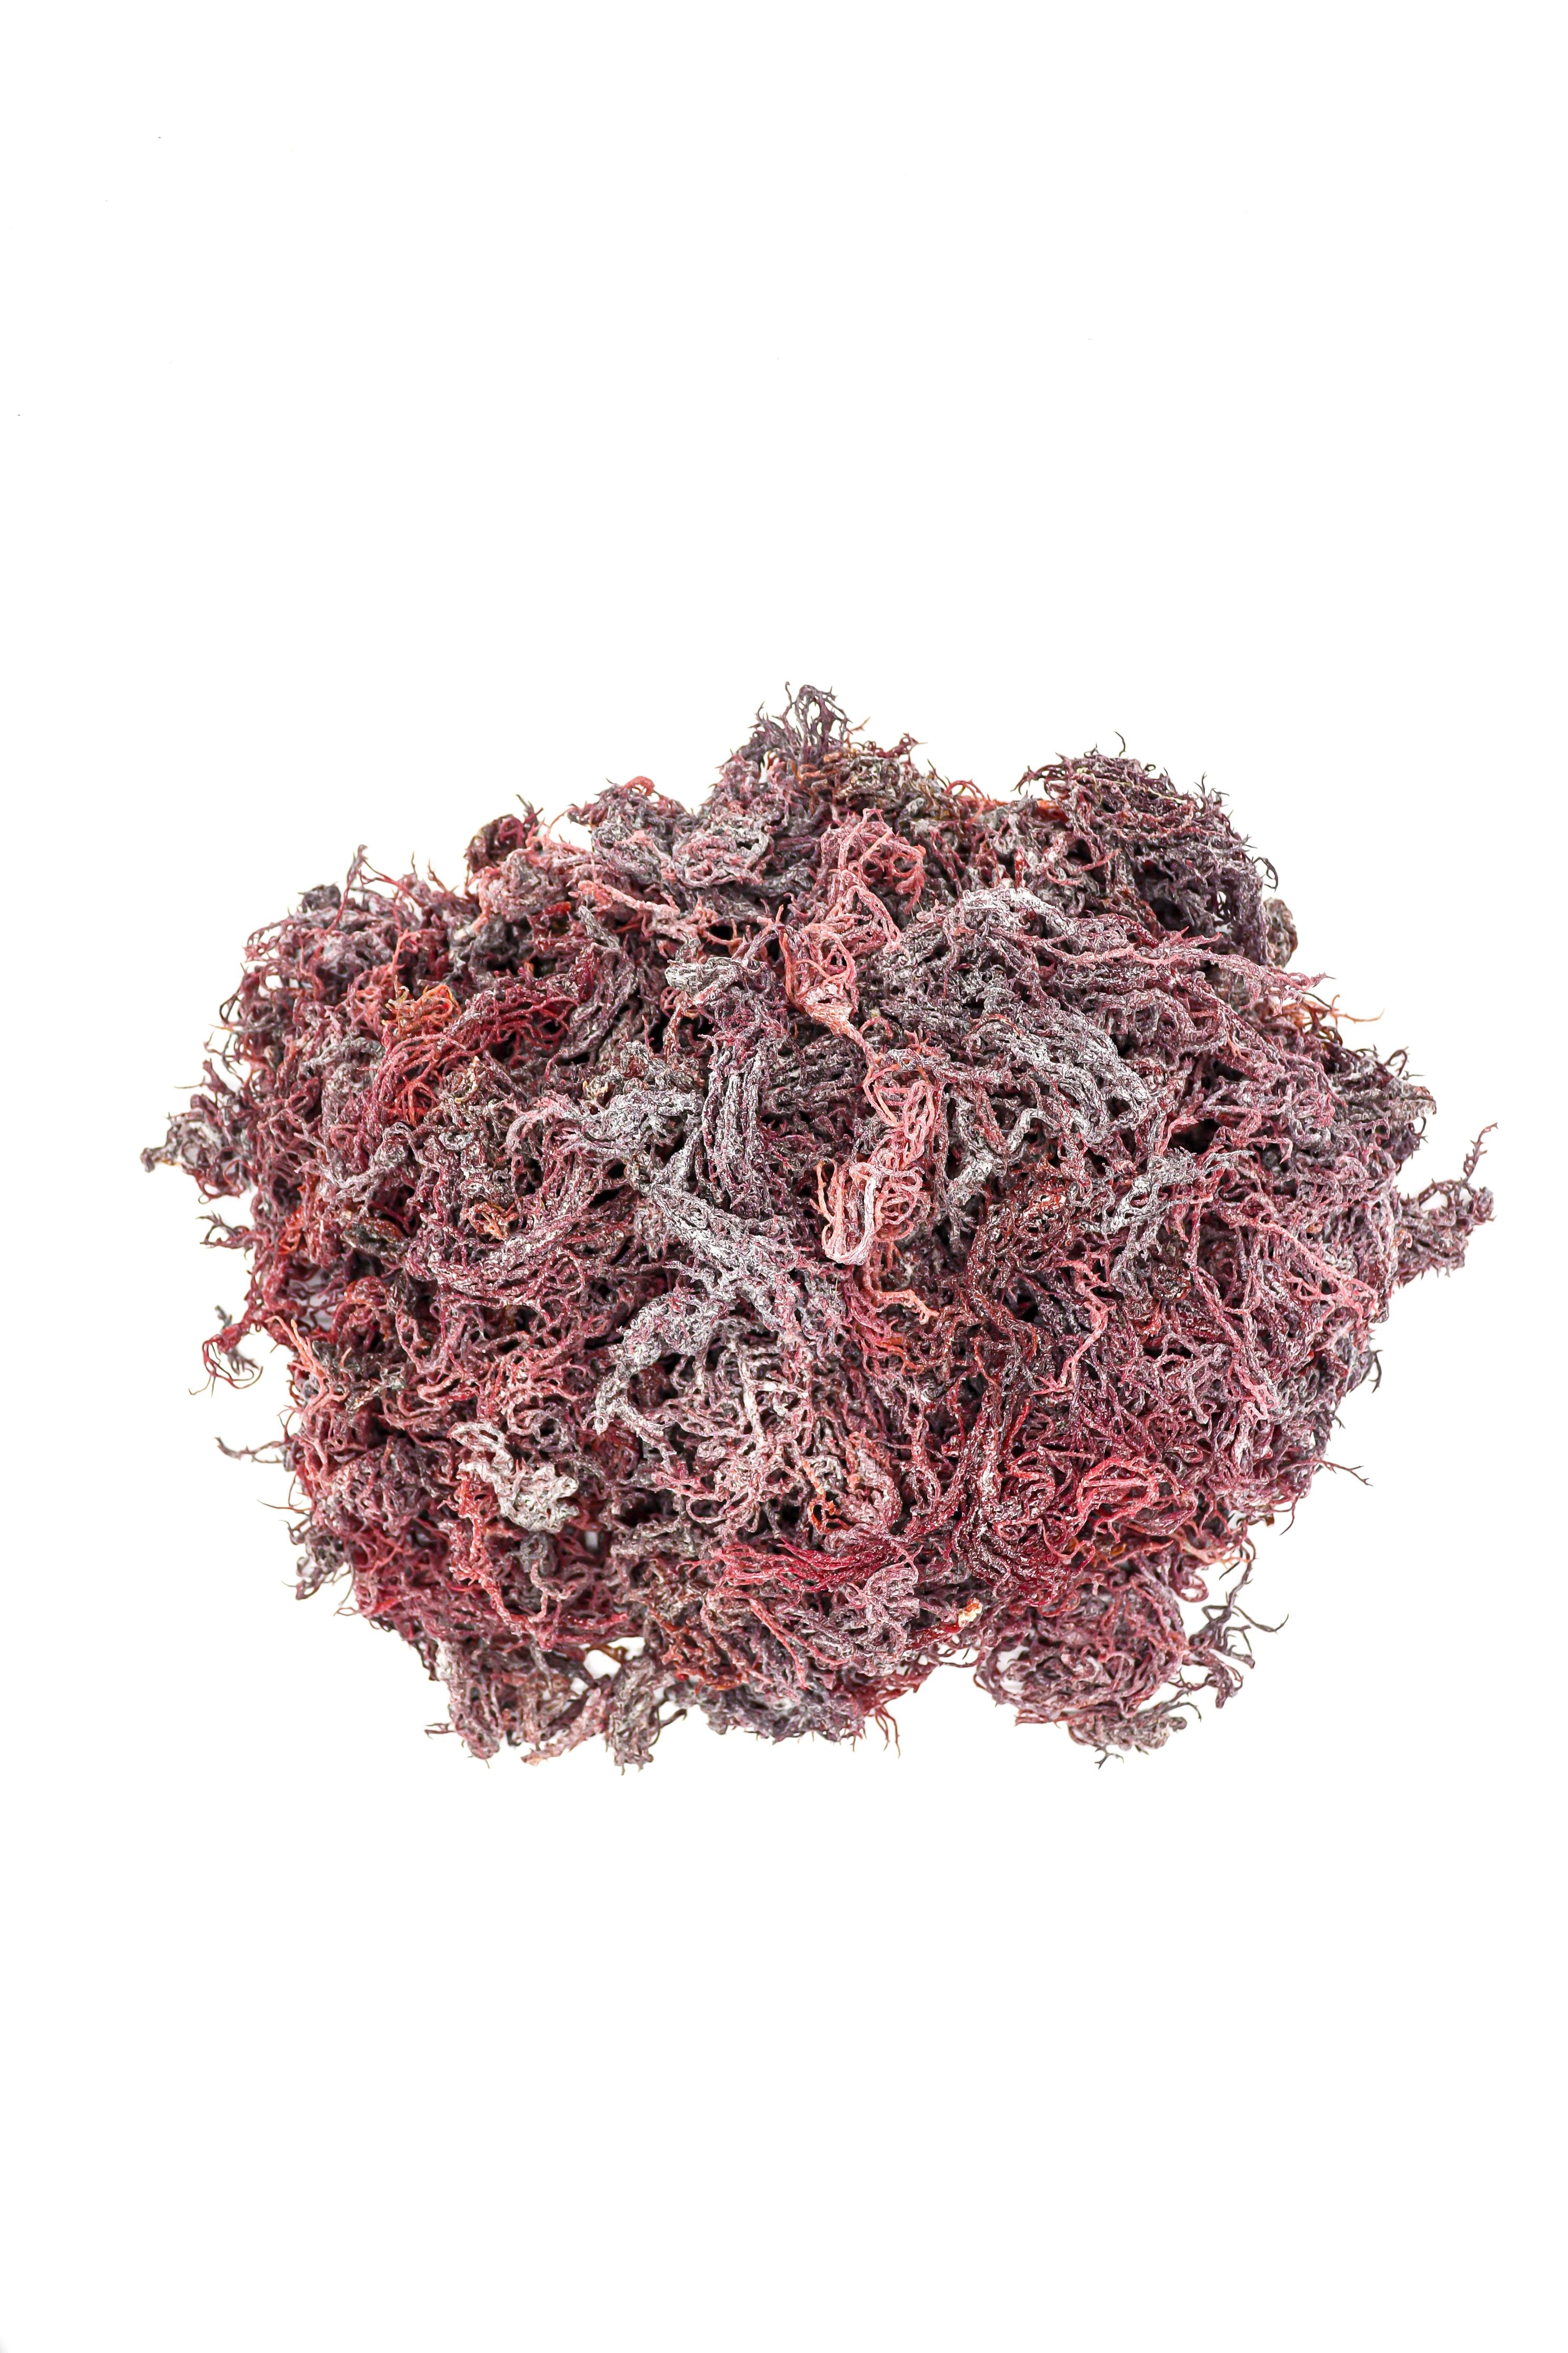 70g Purple St Lucia Sea Moss - Gracilaria - St Lucia Sea Moss Organic Buy UK 